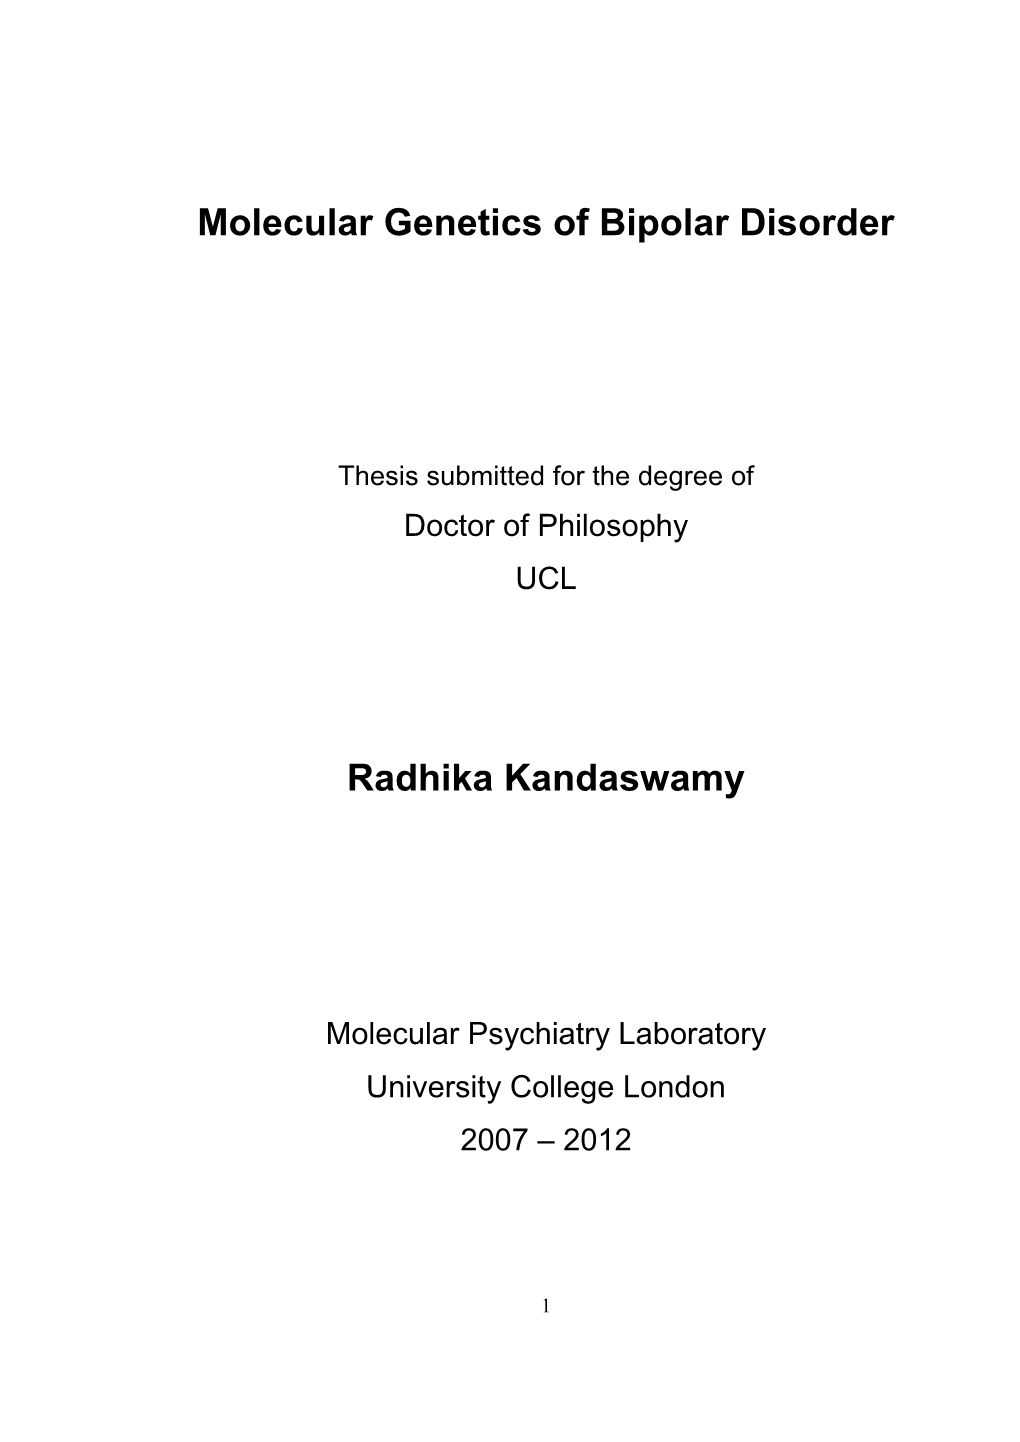 Molecular Genetics of Bipolar Disorder Radhika Kandaswamy